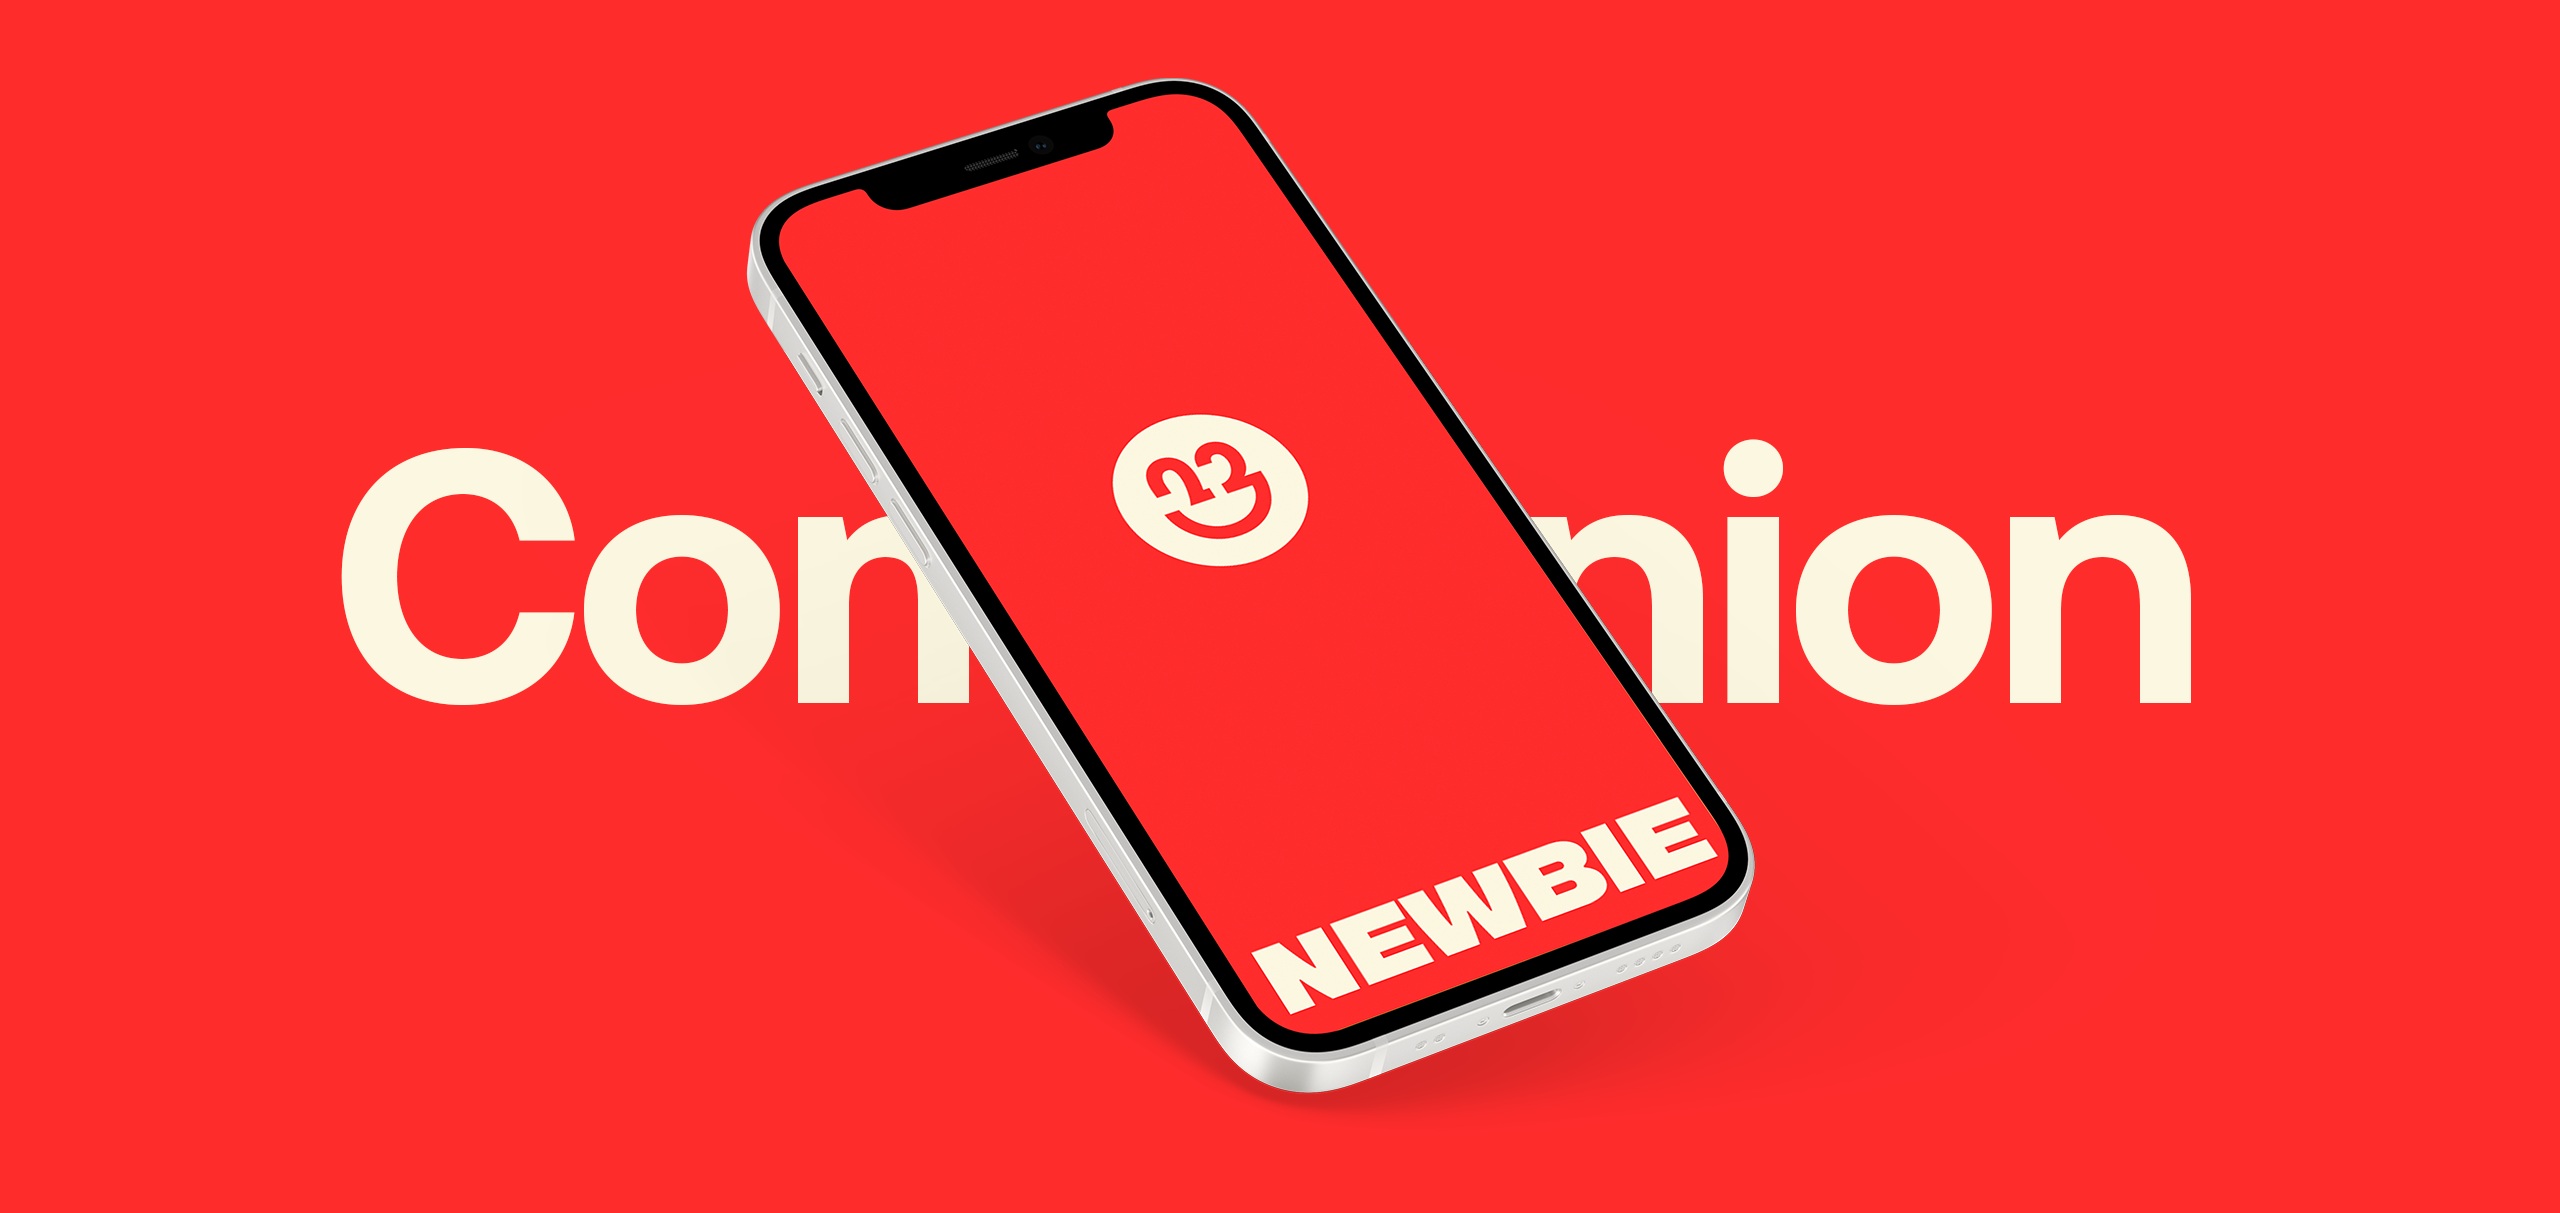 Newbie App on red background